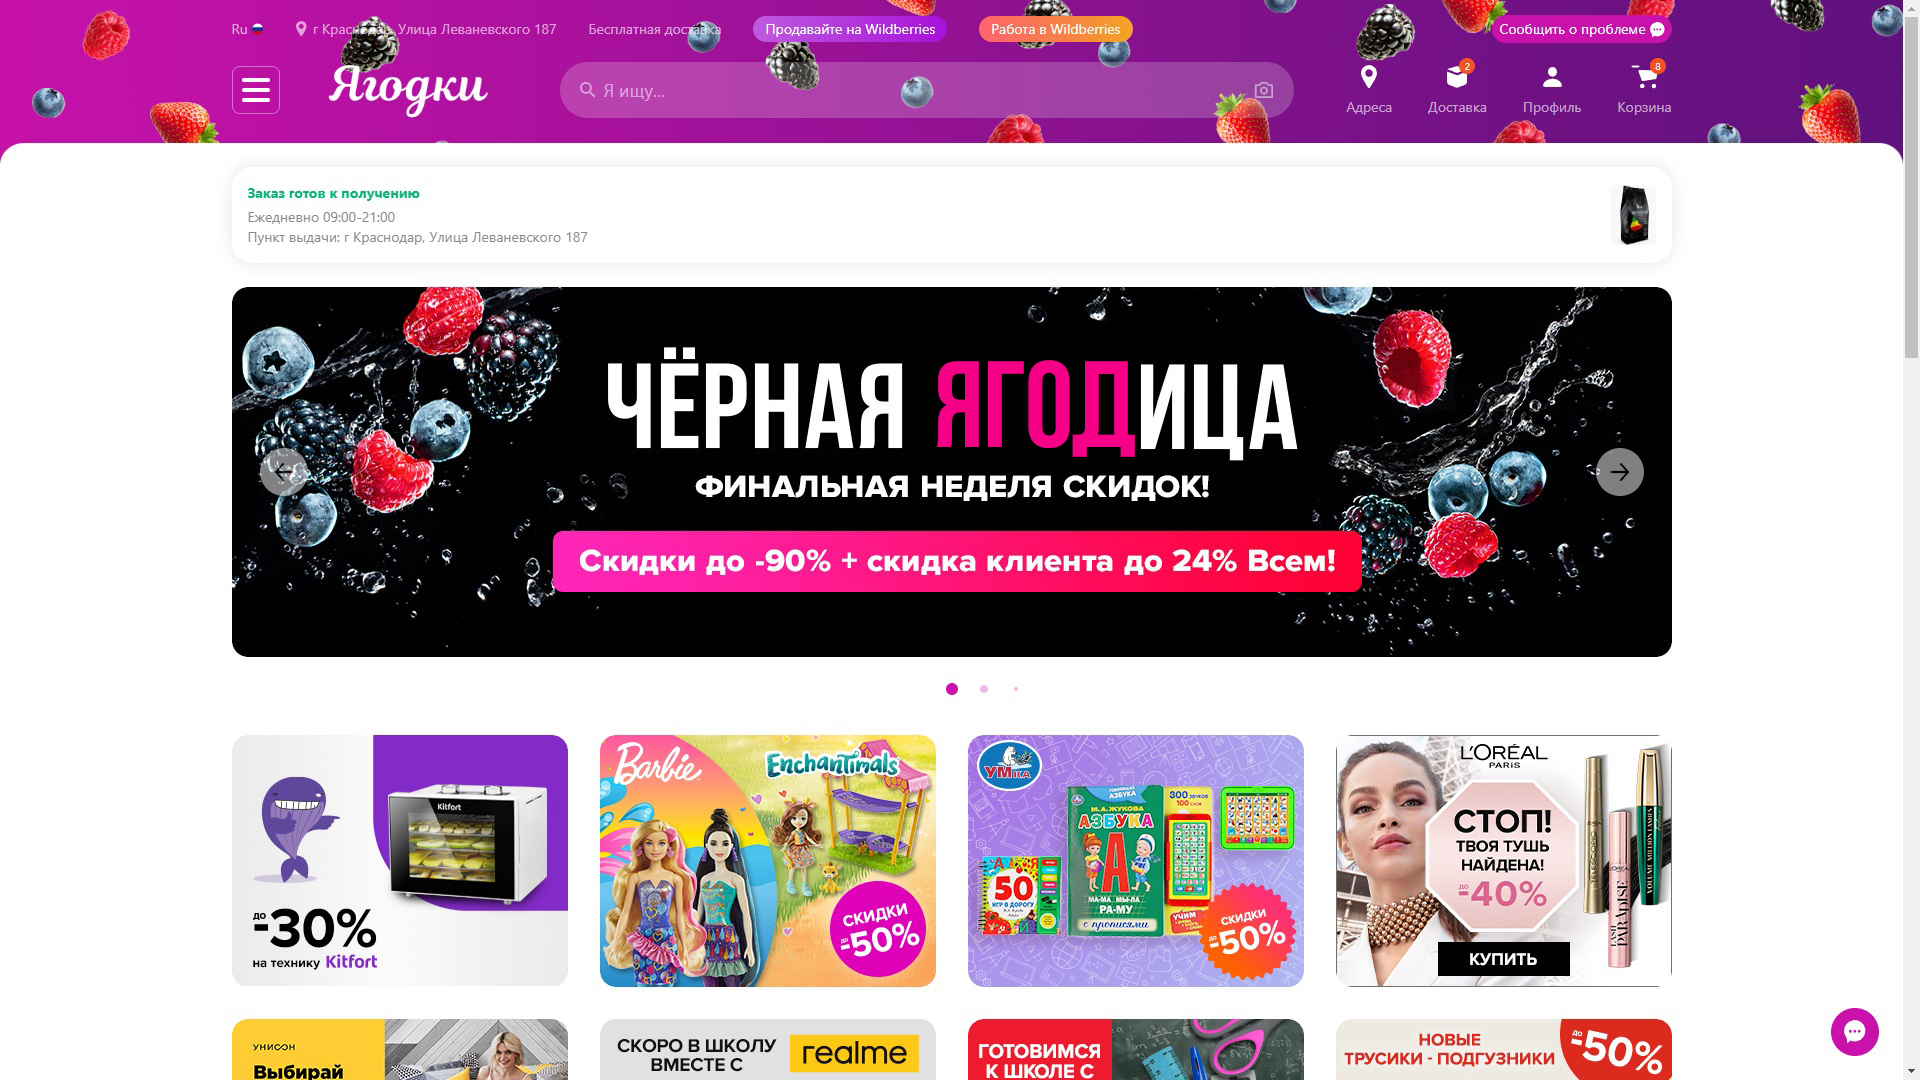 Buttock rebranding has begun! - My, Wildberries, Berries, Rebranding, Photoshop master, Photoshop, Humor, Russia